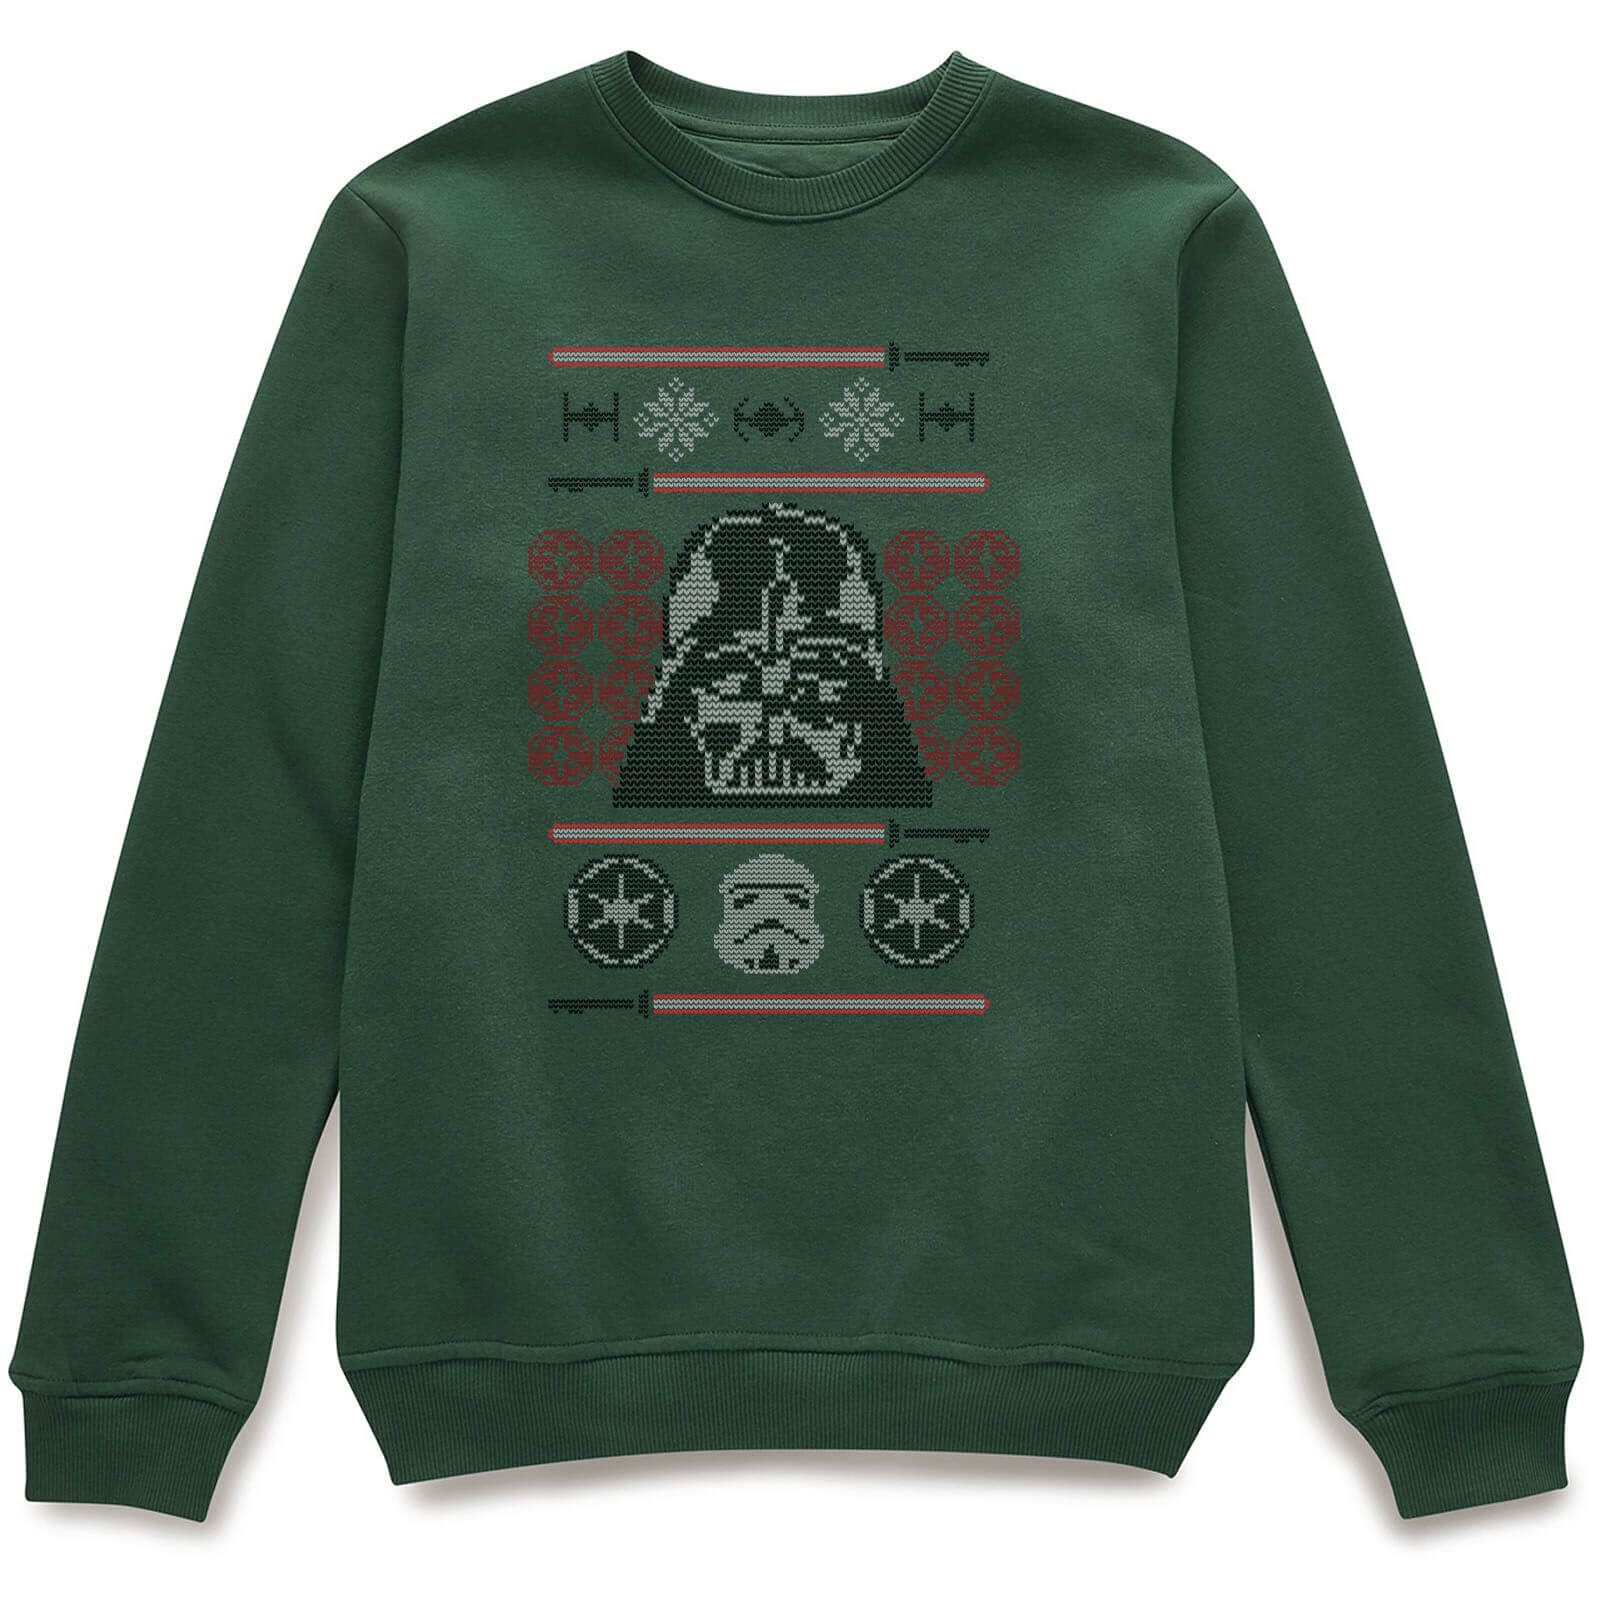 Star Wars Darth Vader Face Knit Green Christmas Sweatshirt - XXL - Green